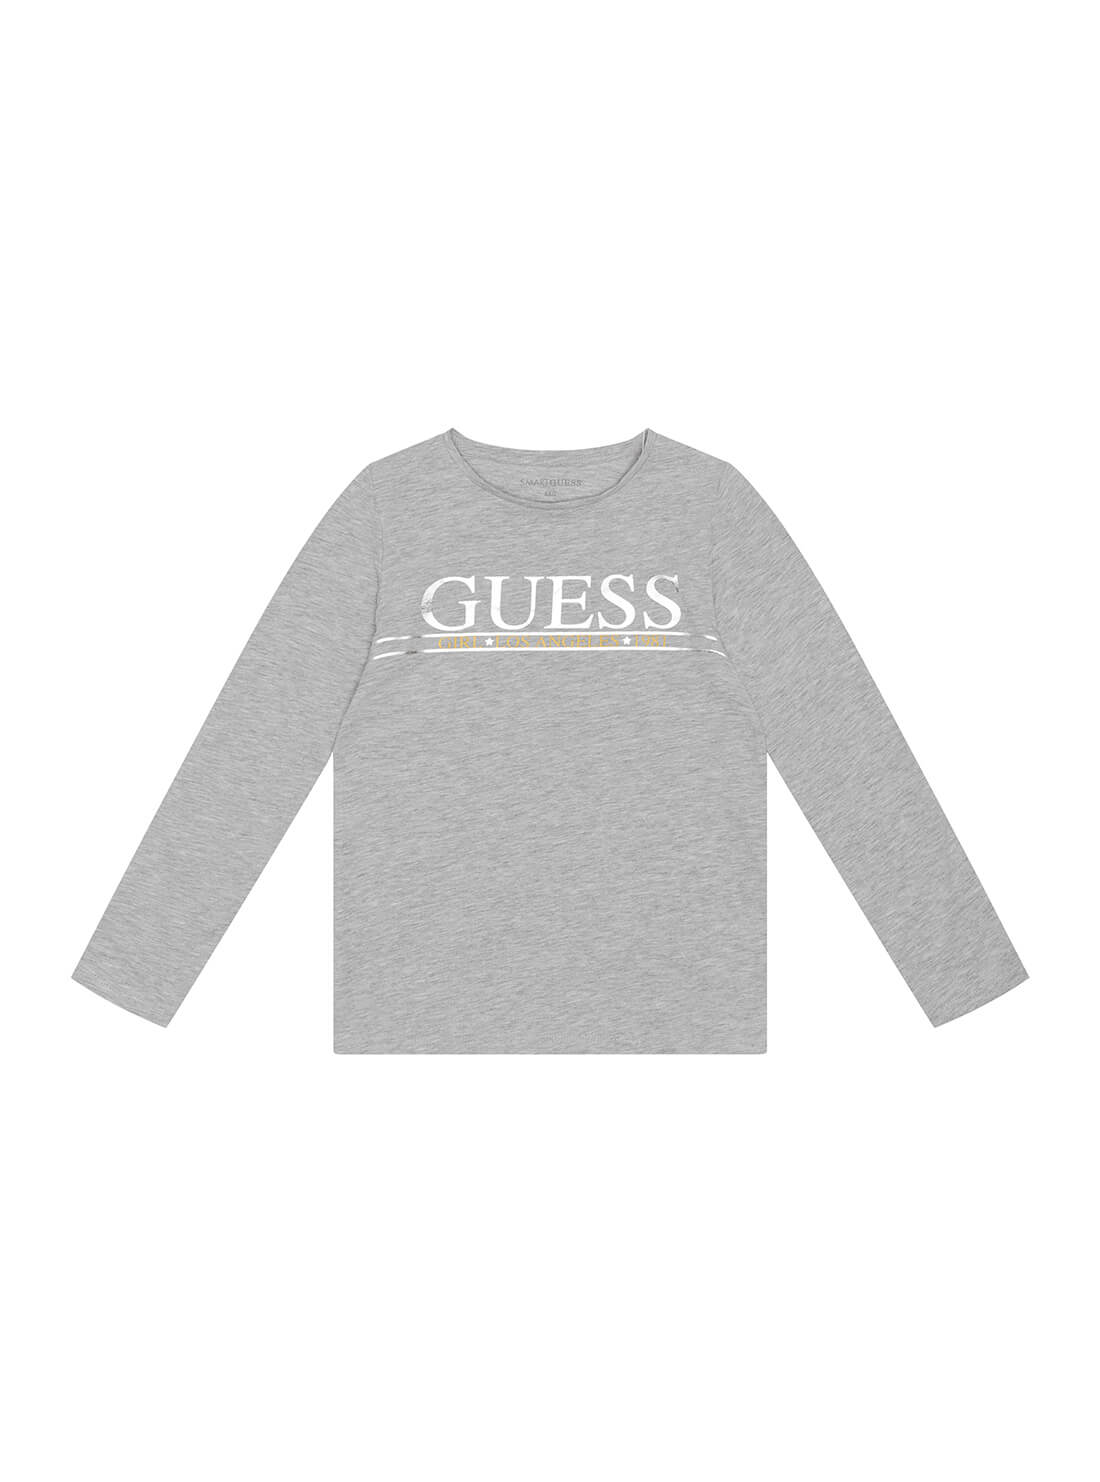 GUESS Light Stone Long Sleeve Logo Girls T-Shirt (2-7) Front View